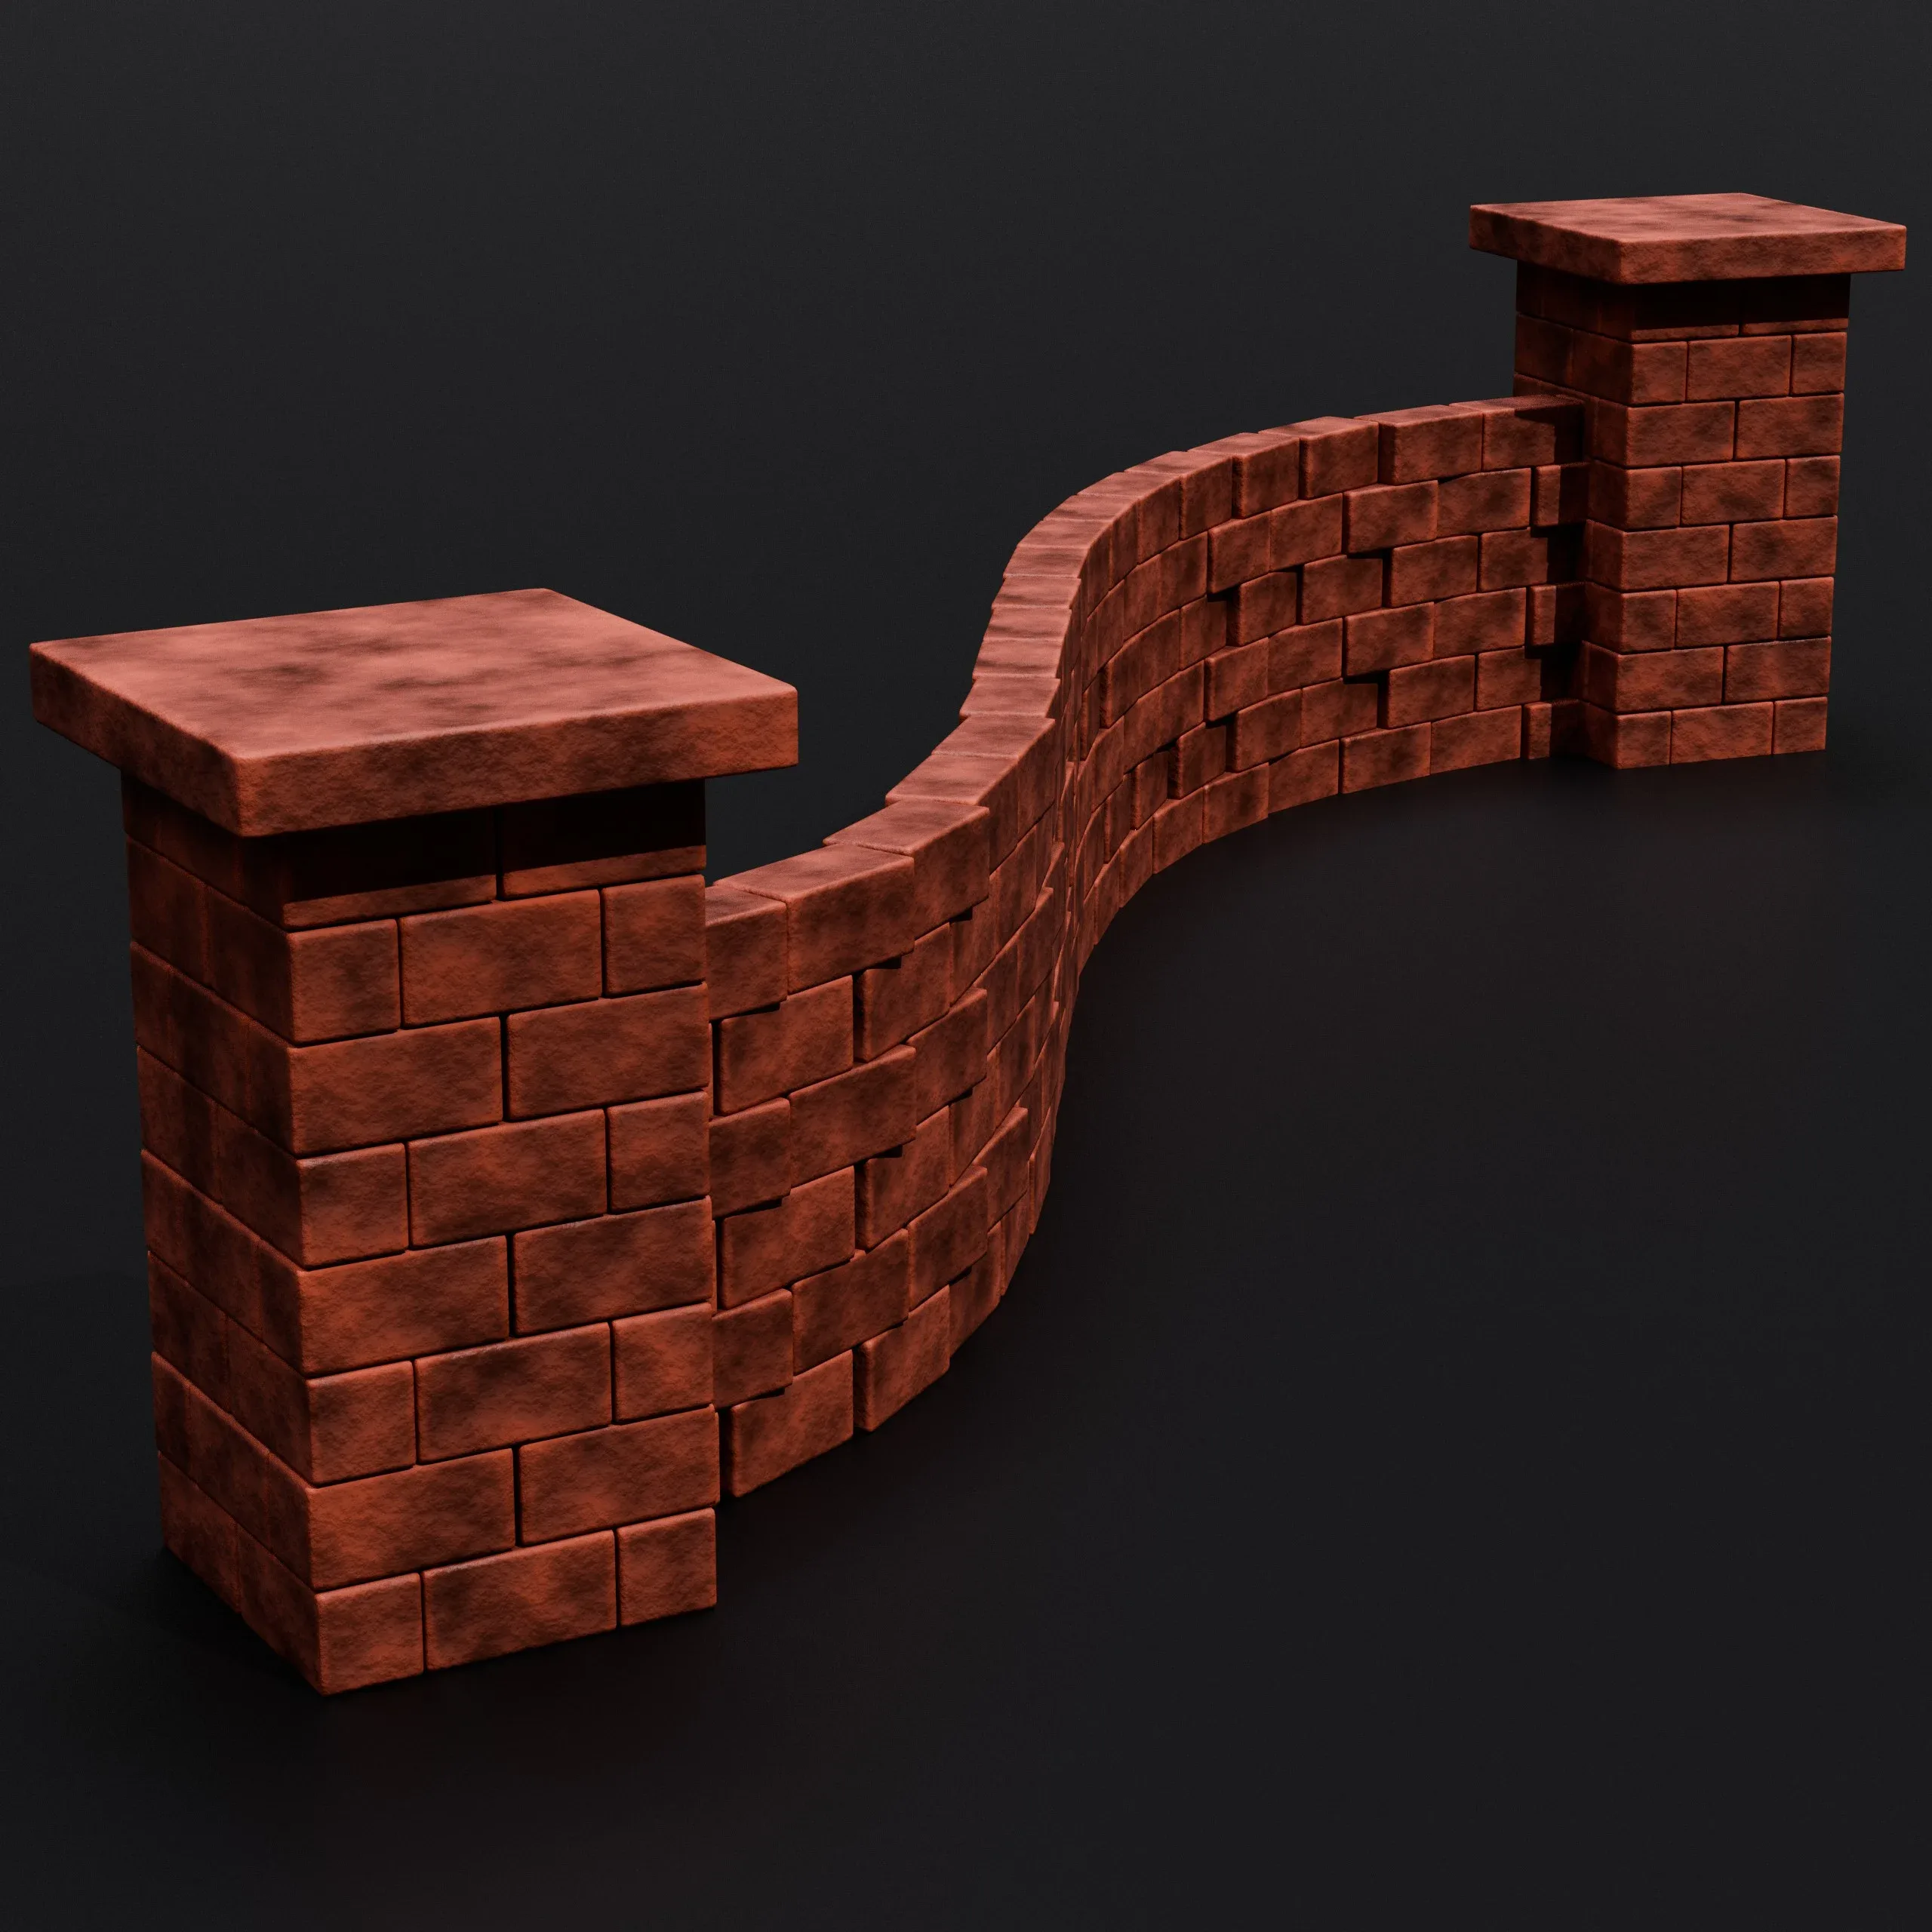 Customizable Brick Wall - Geometry Nodes (Blender)